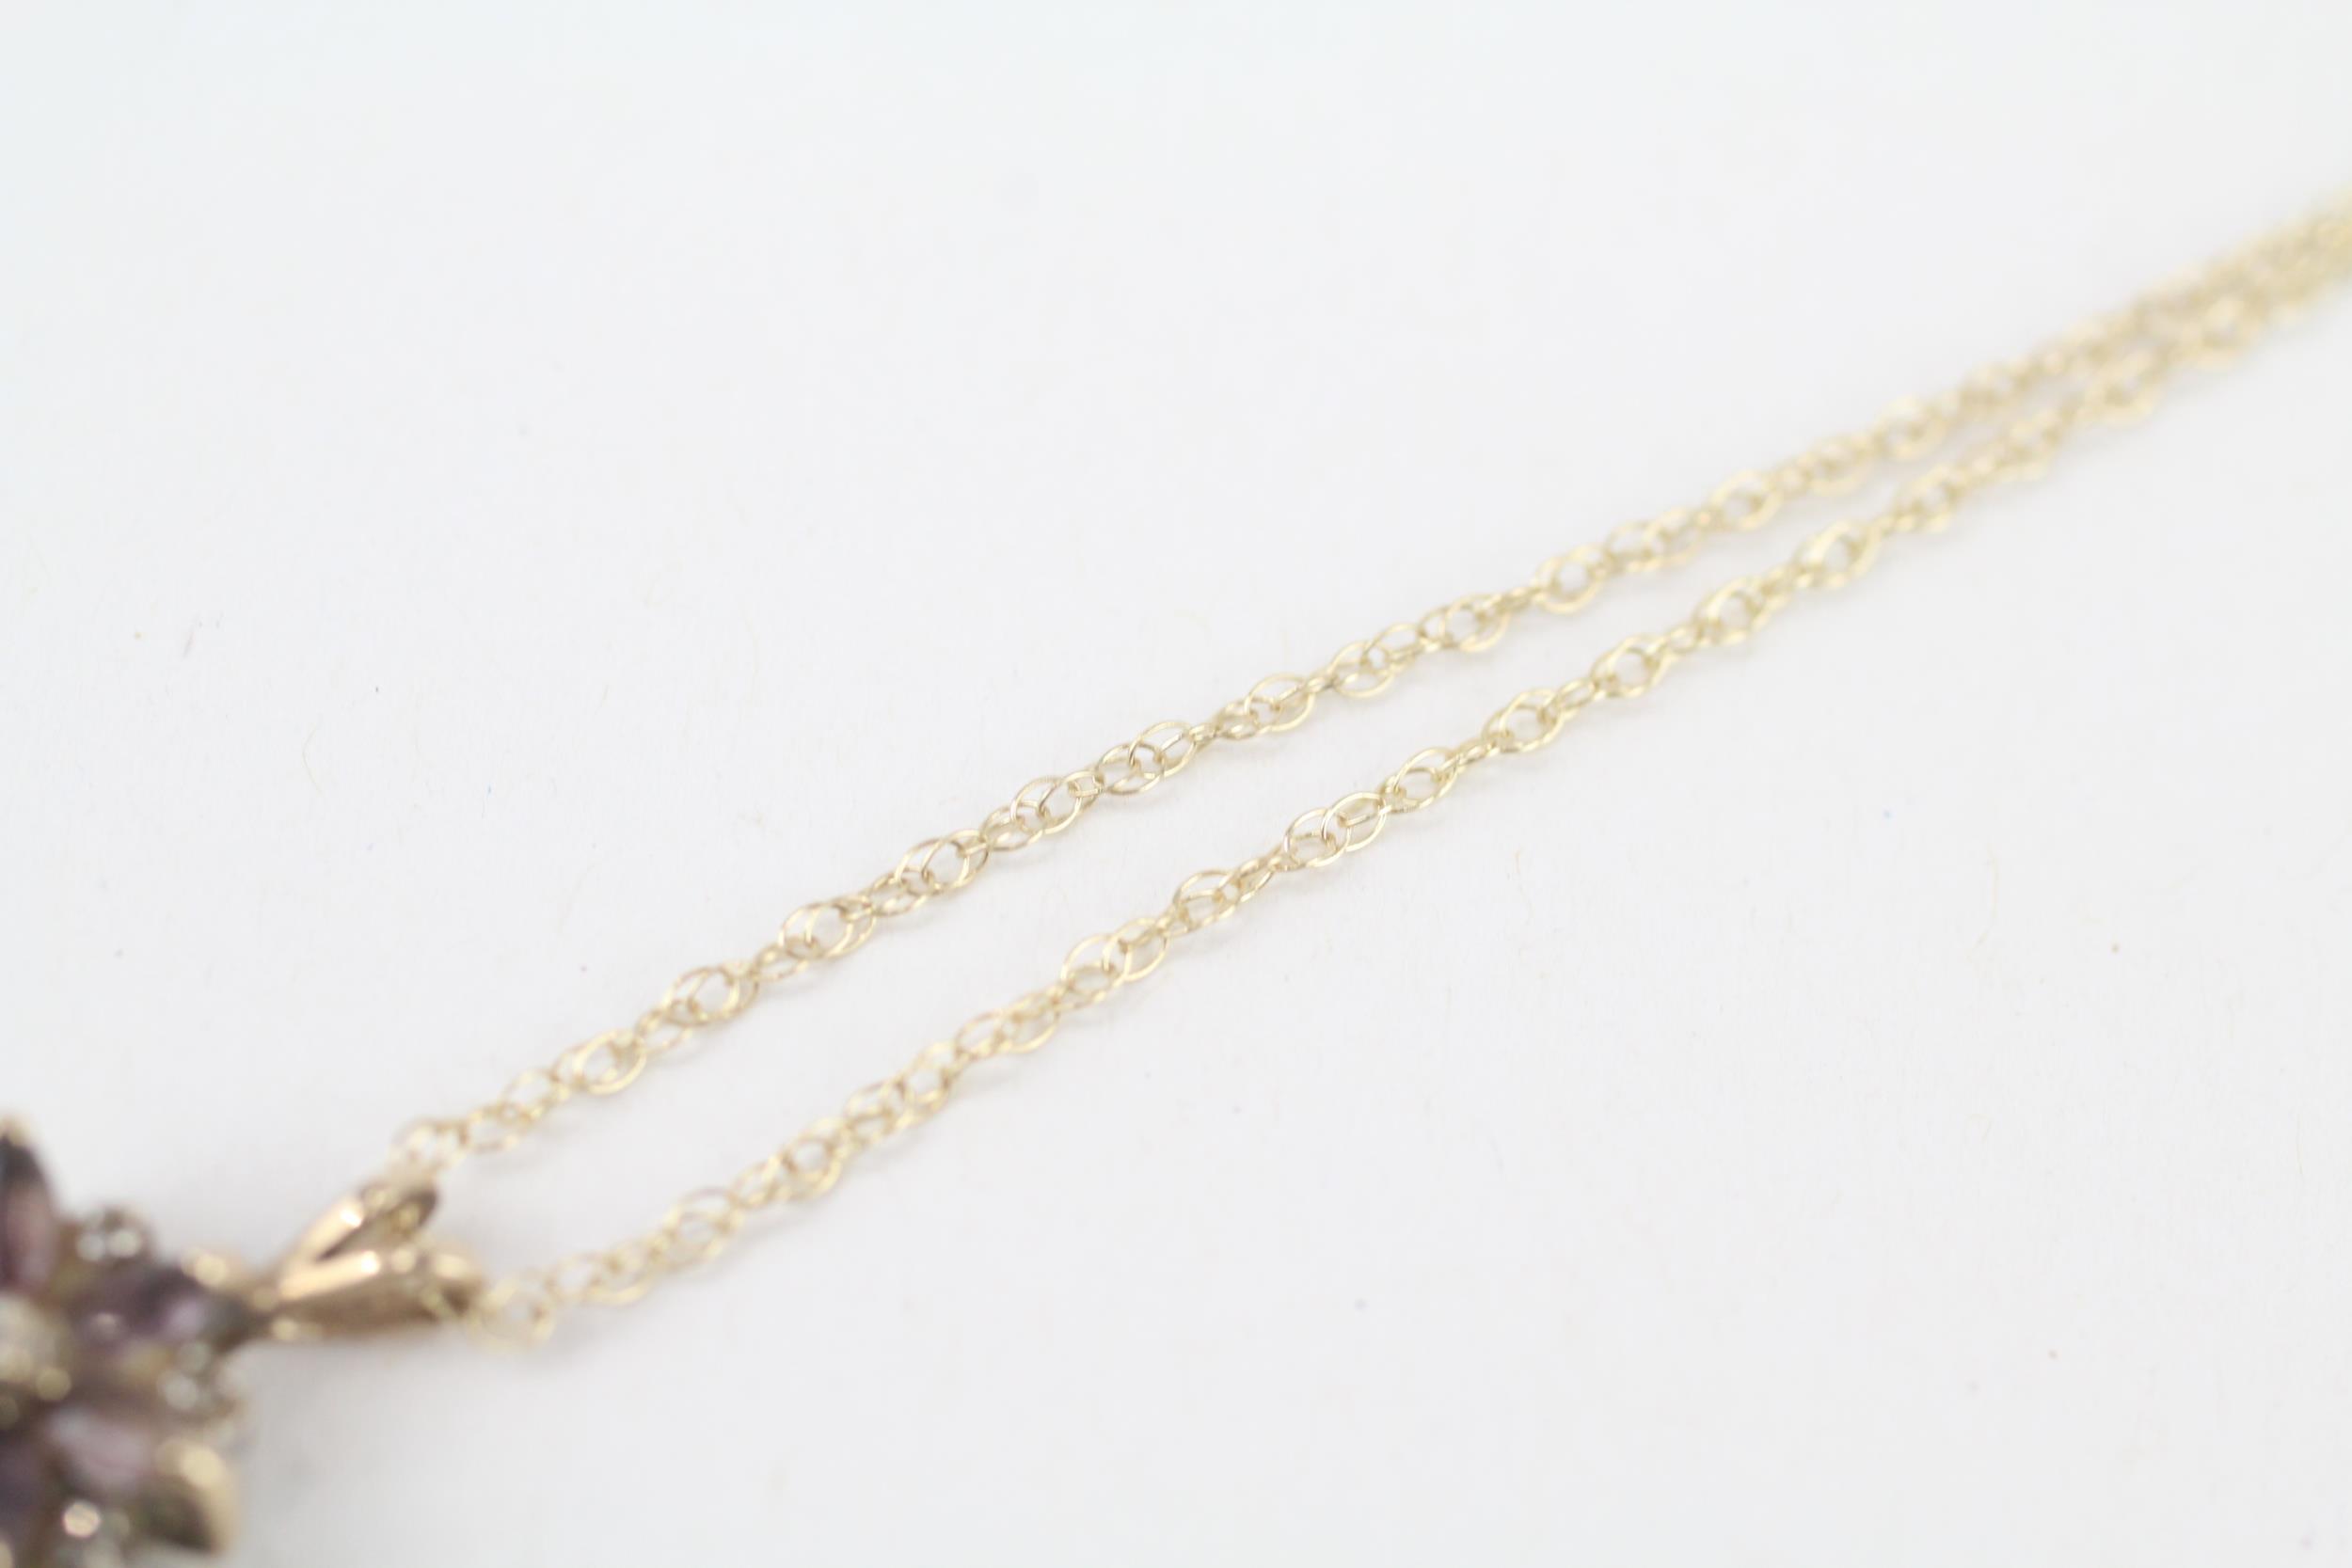 9ct gold diamond & purple gemstone floral cluster pendant necklace 1.7 g - Image 3 of 4